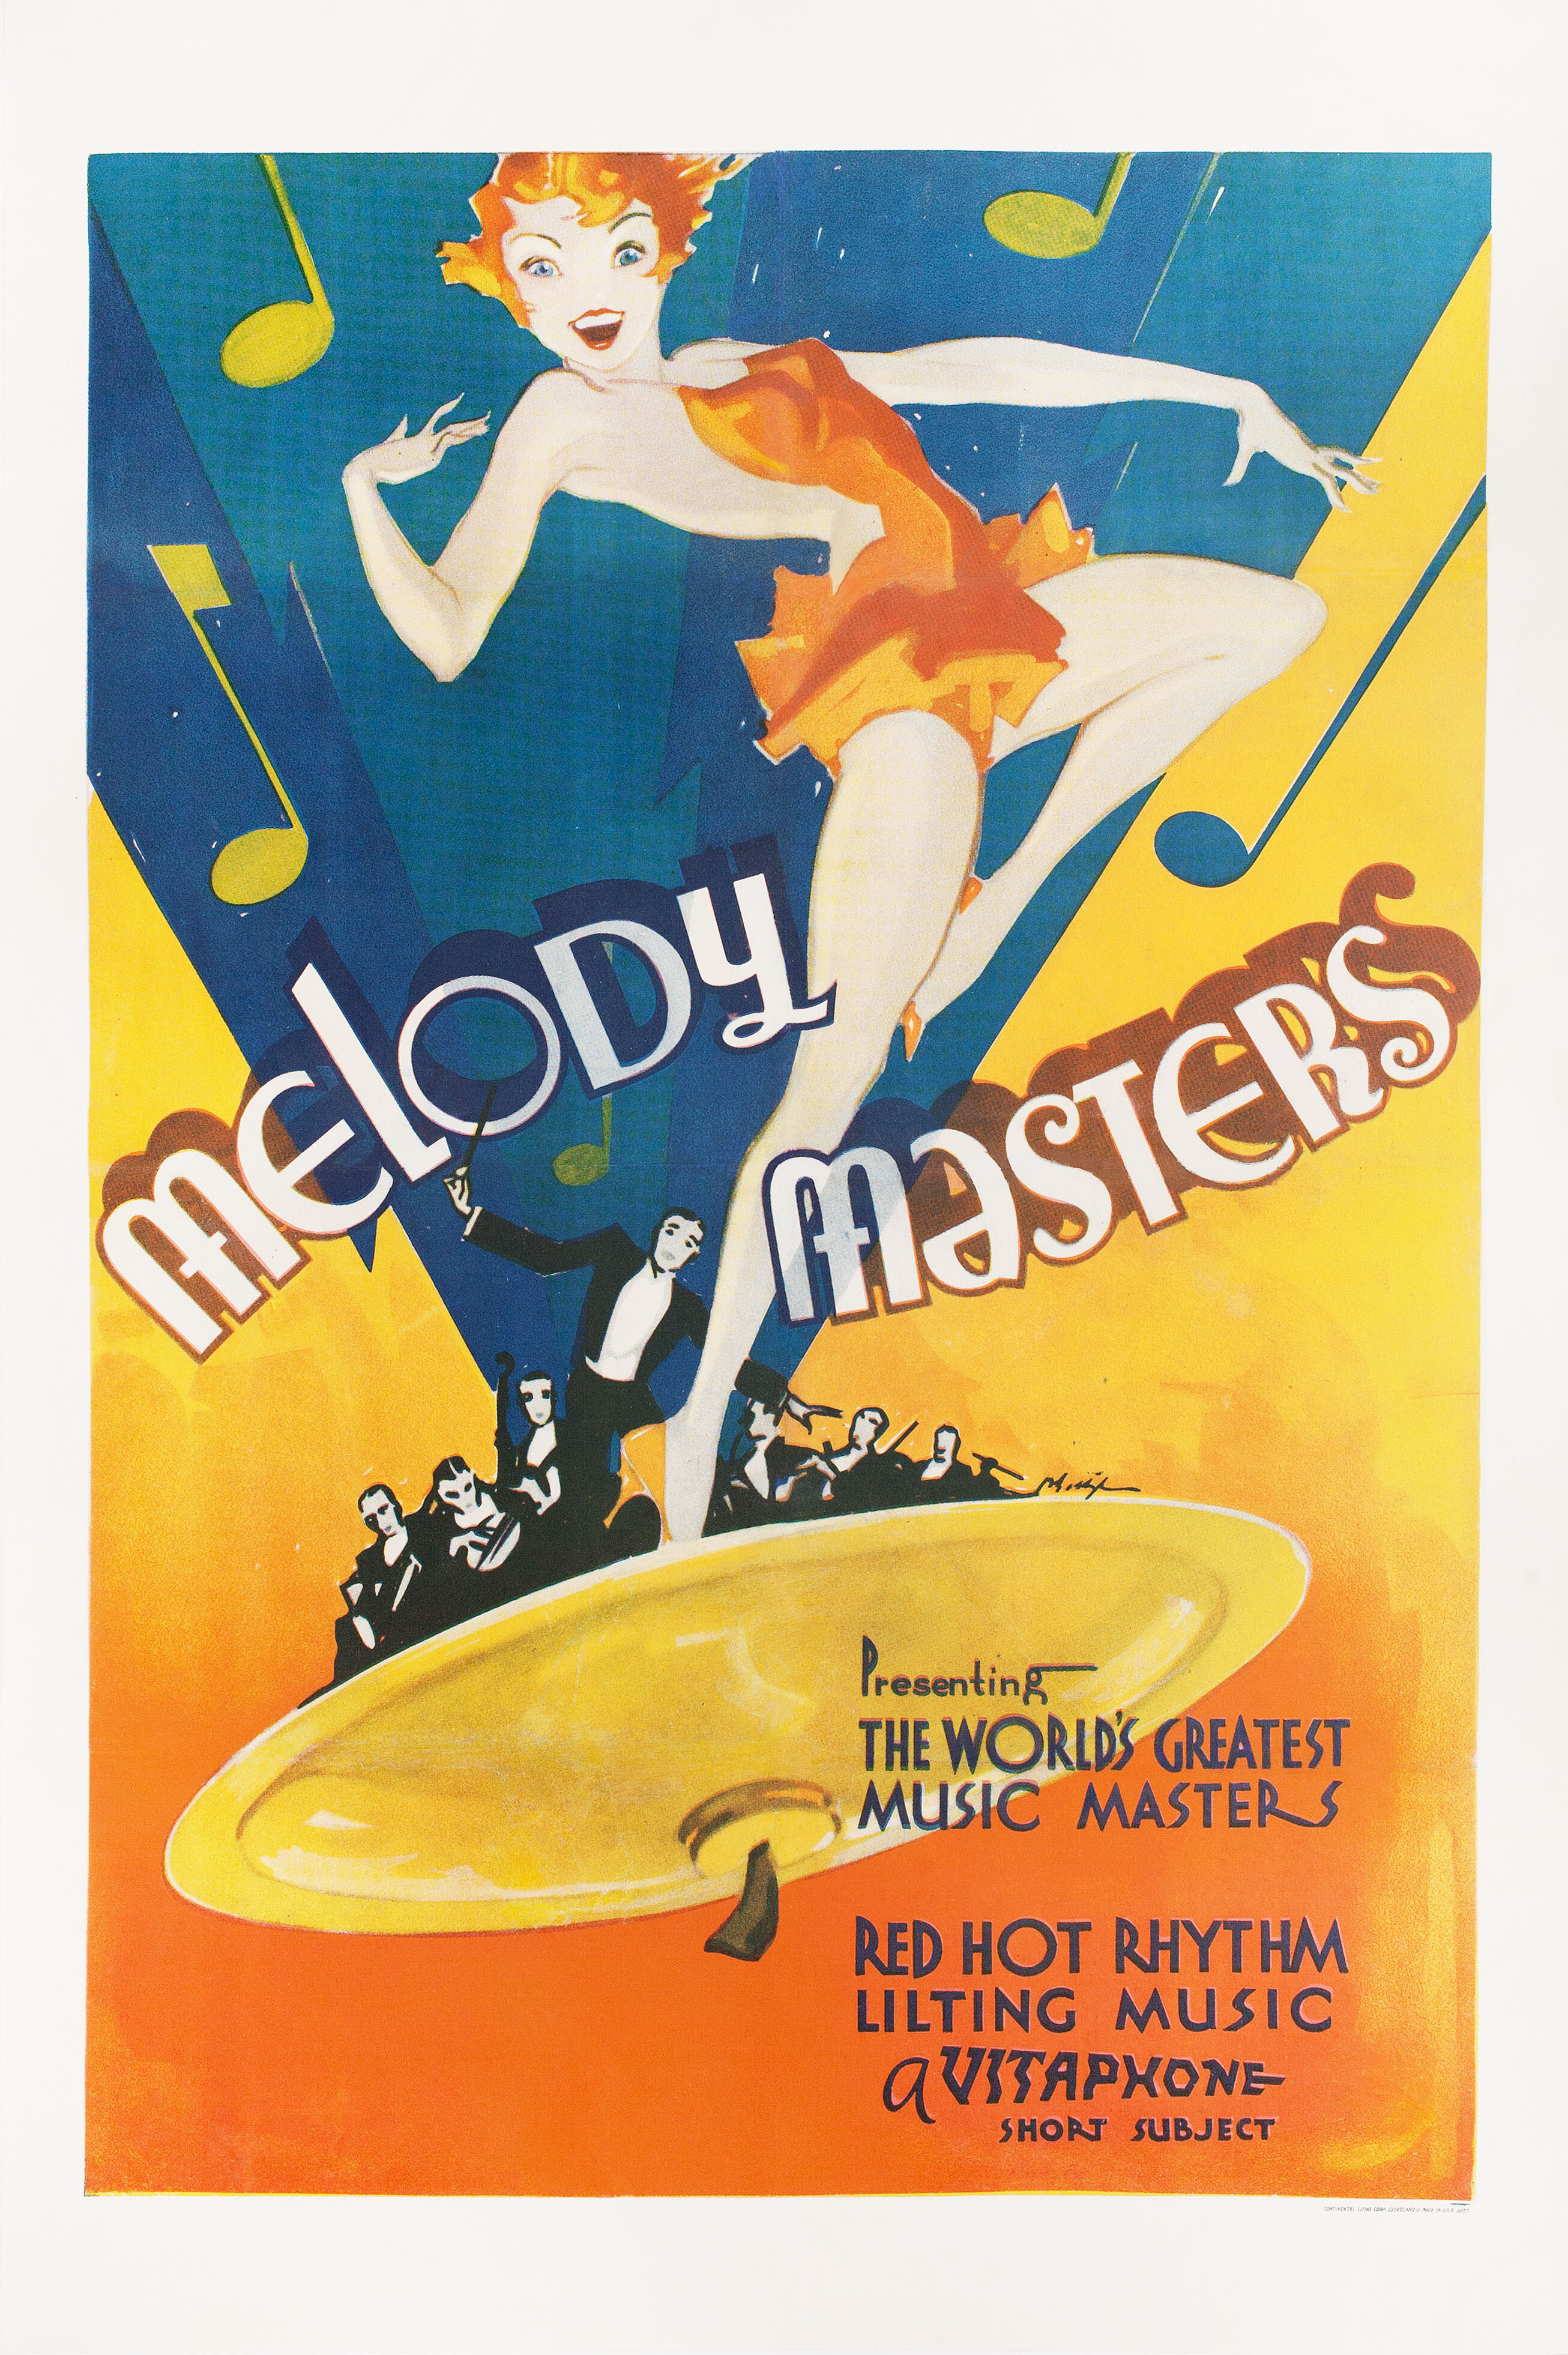 Мастера Мелодии (Melody Masters, 1933), , постер к фильму в стиле ар-деко (США, 1933 год)